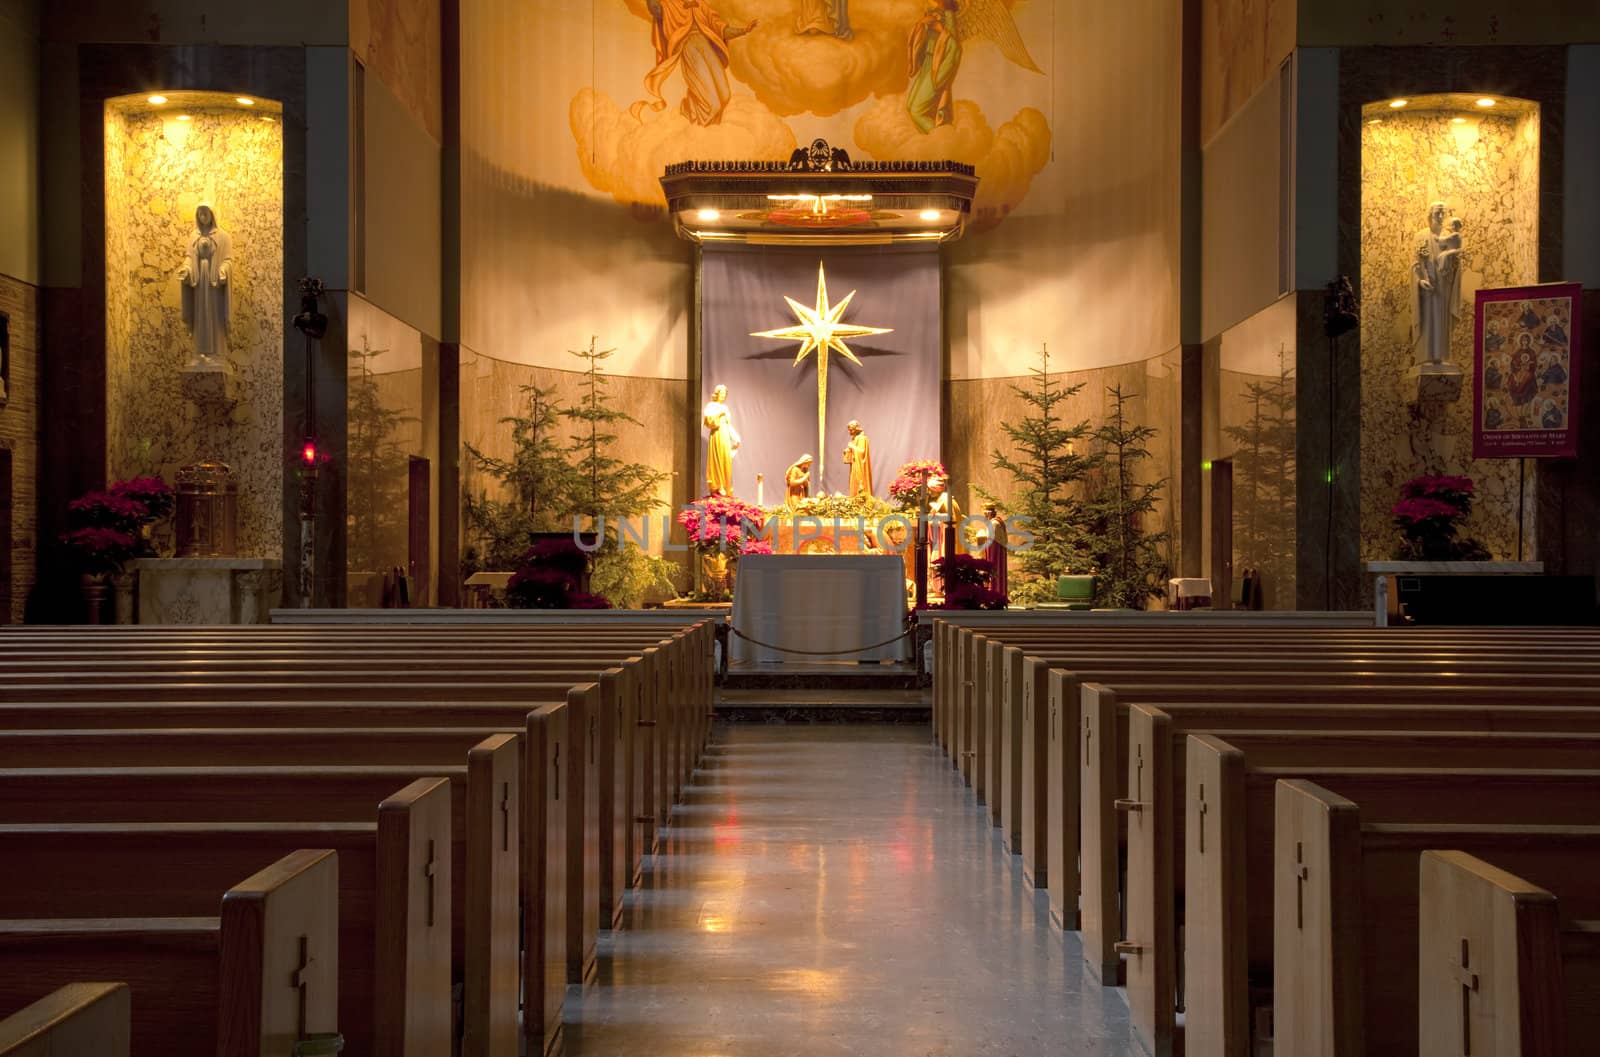 Catholic church interior with nativity scene, Portland OR.